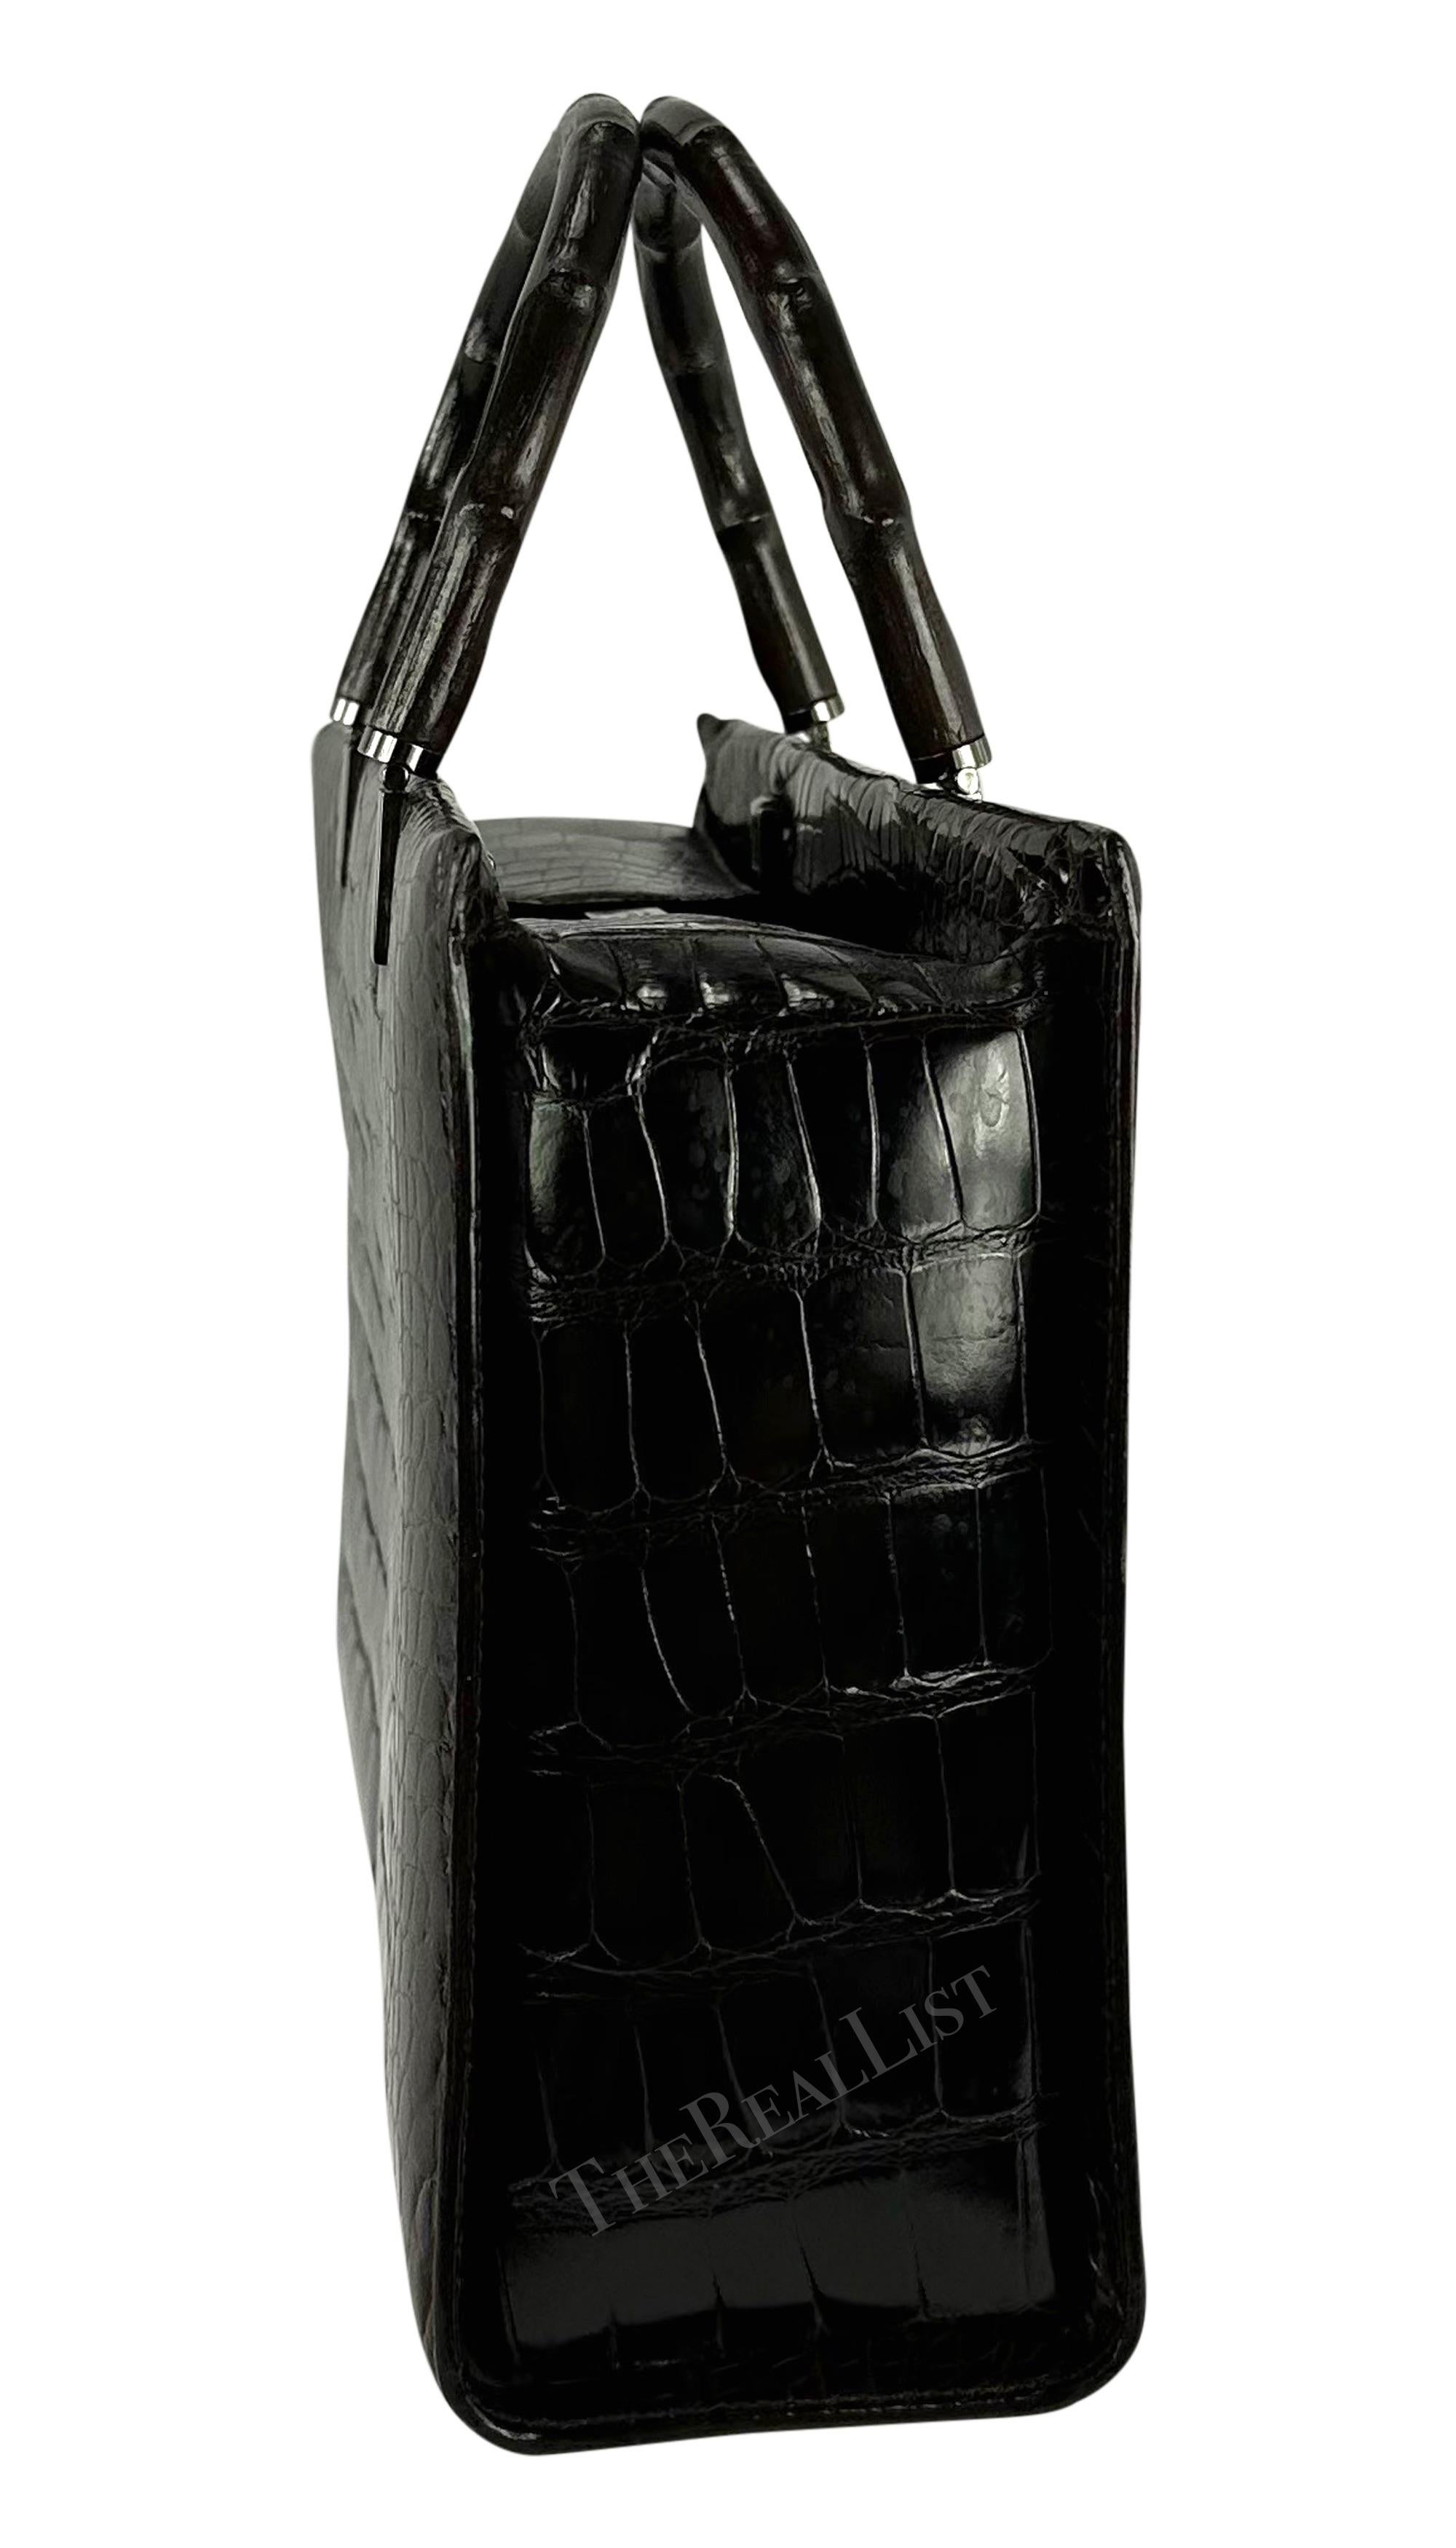 F/W 1998 Gucci by Tom Ford Ad Campaign Black Crocodile Bamboo Tote Bag  For Sale 1